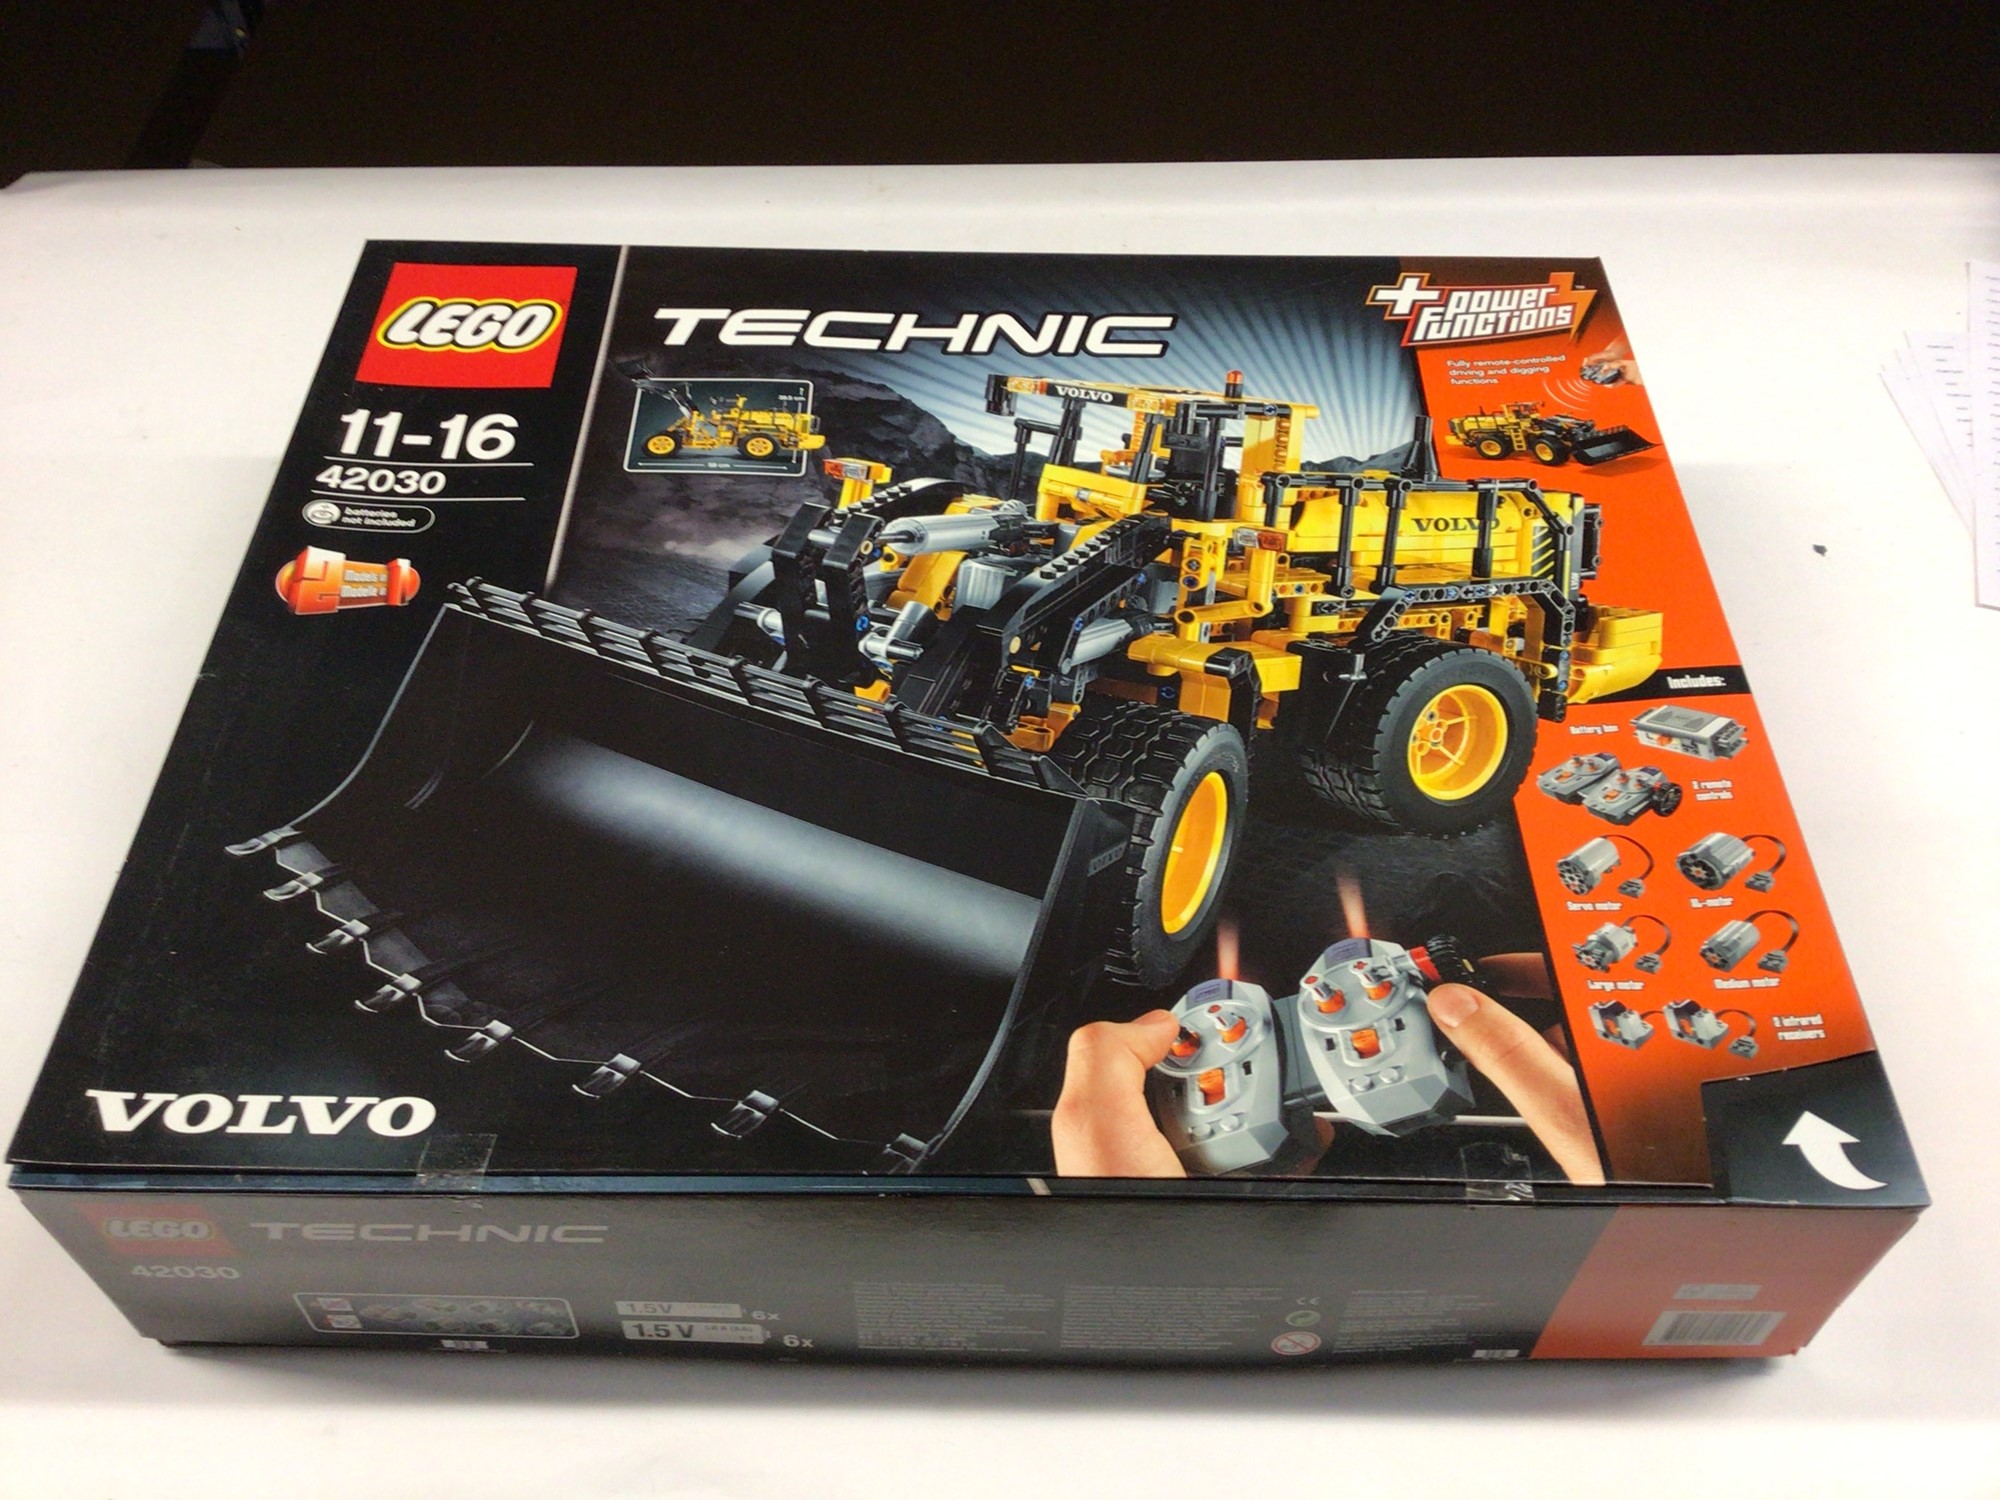 Lot 49 - Lego Technic 42030 Volvo Wheel Loader